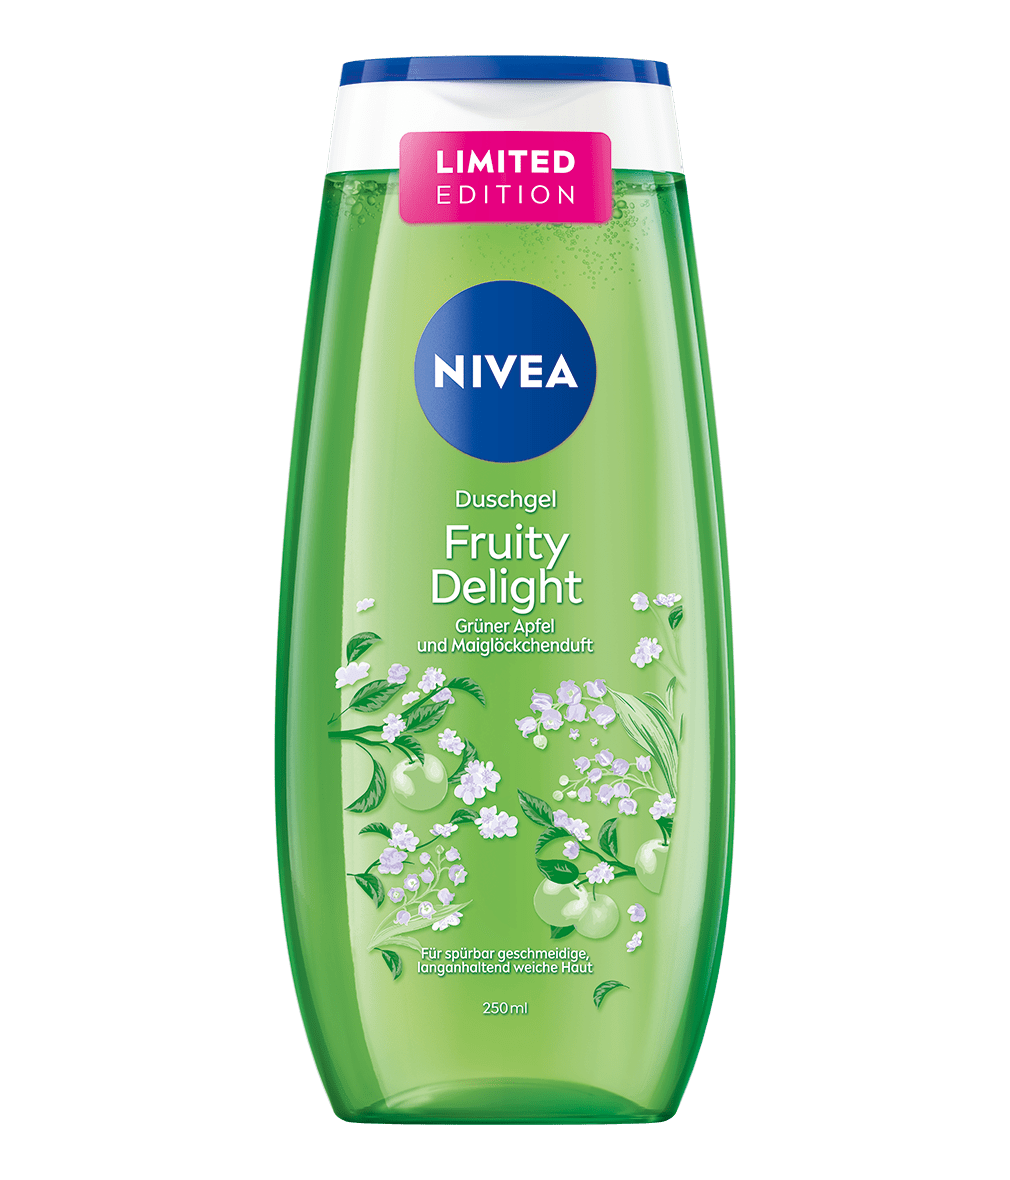 NIVEA Fruity Delight Limited Edition Duschgel